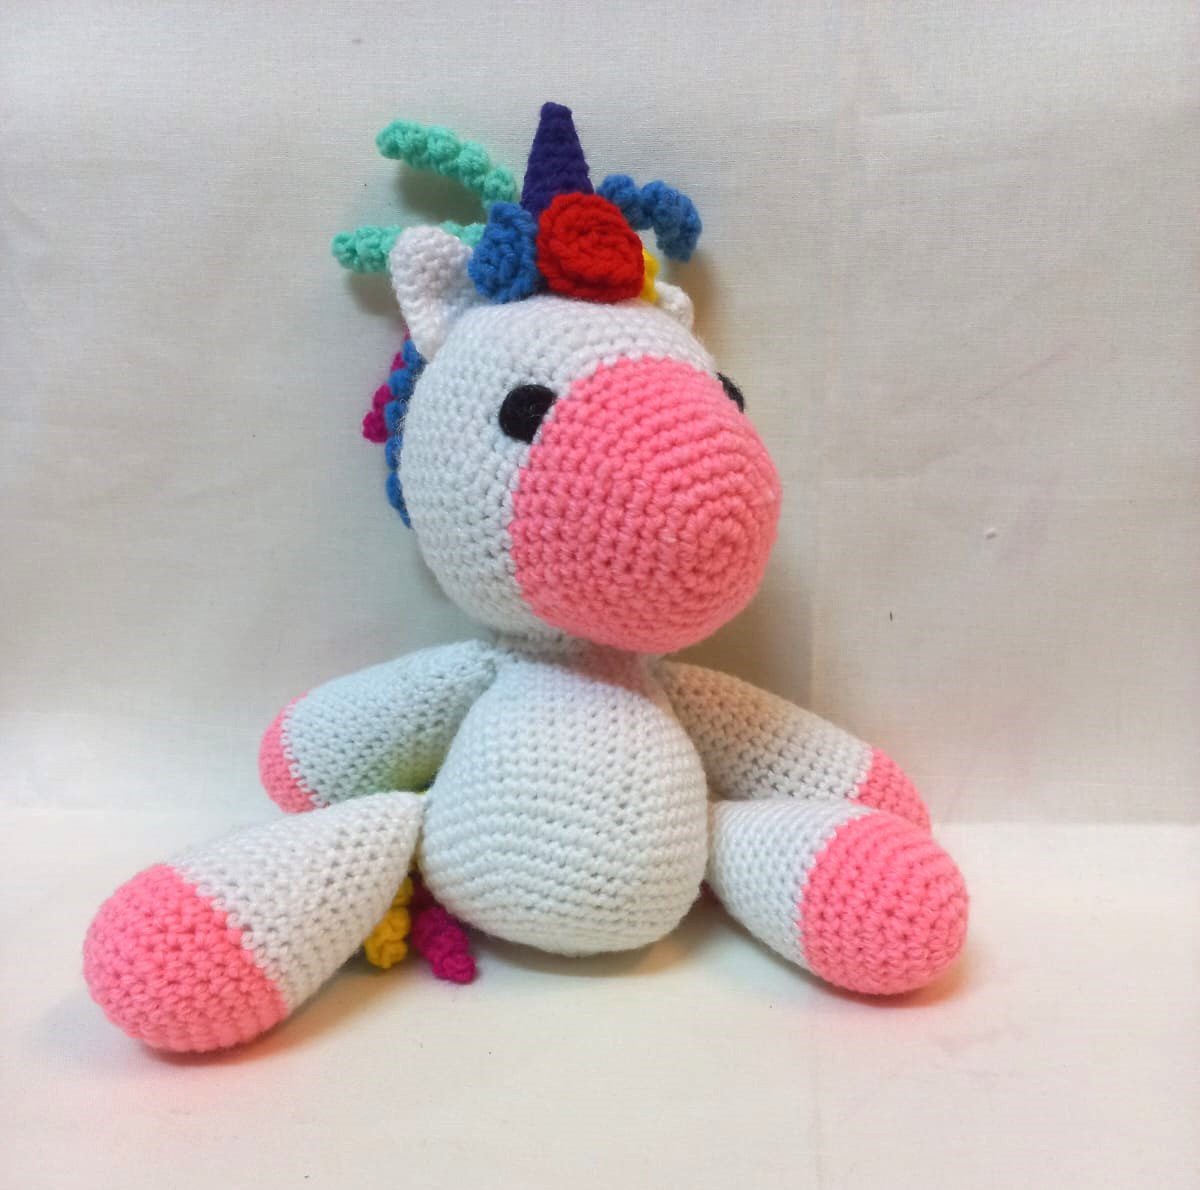 Unicorn Amigurumi Soft Toy - A Unique and Adorable Gift